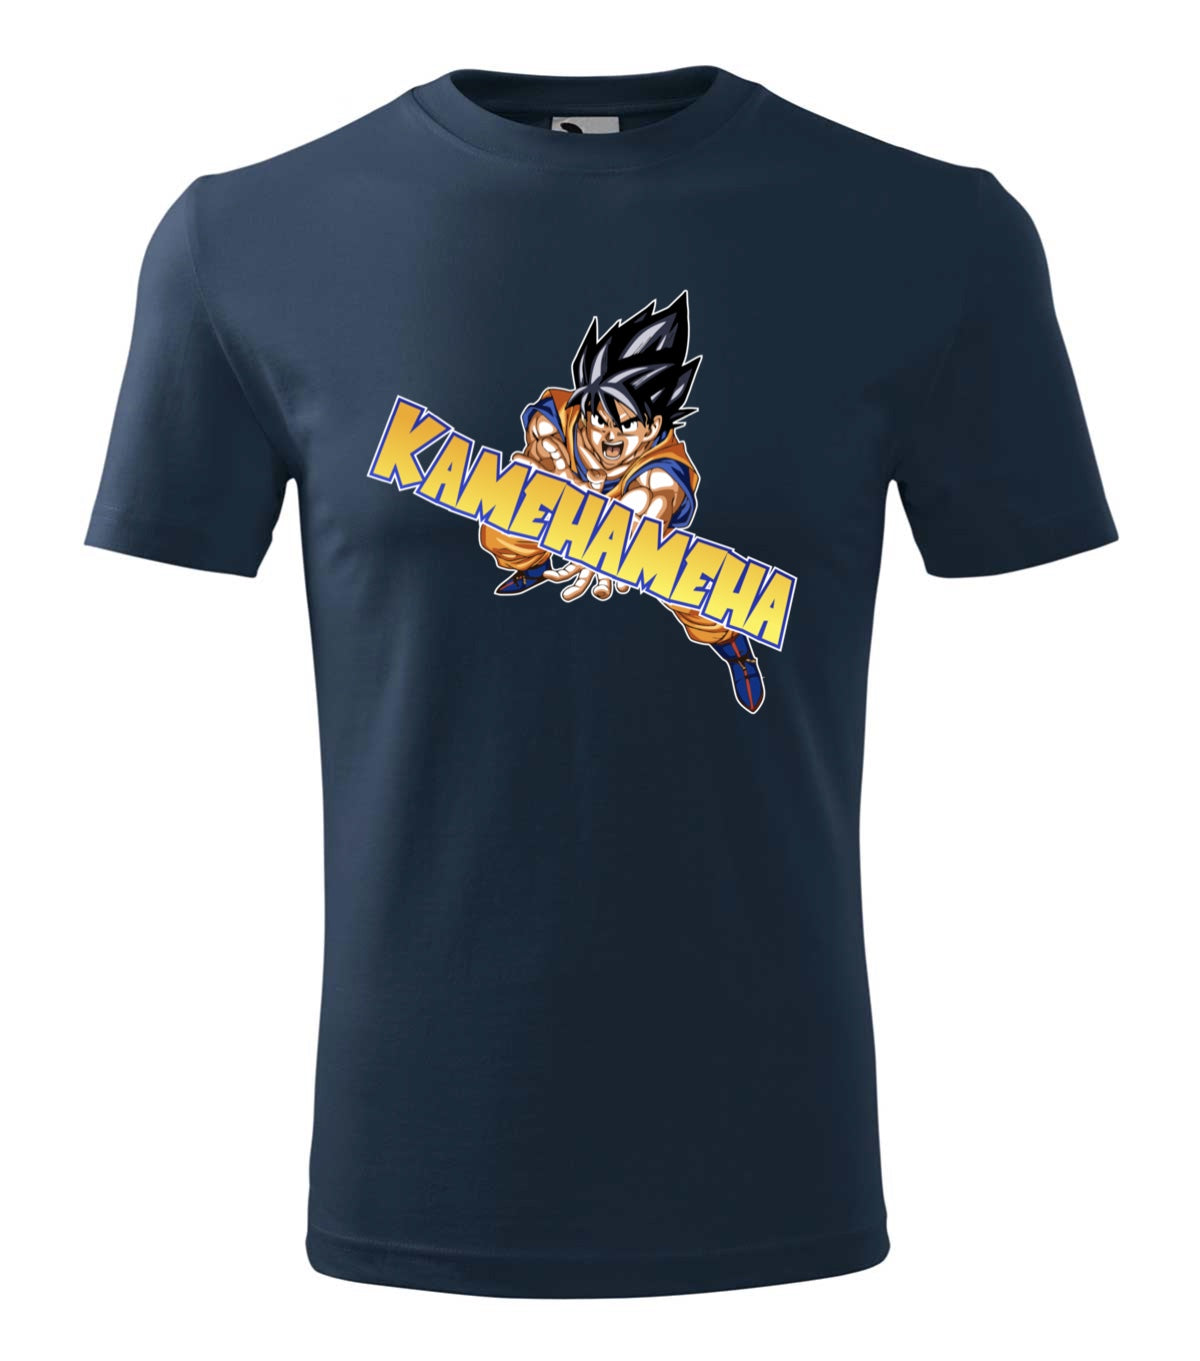 Kamehameha gyerek póló